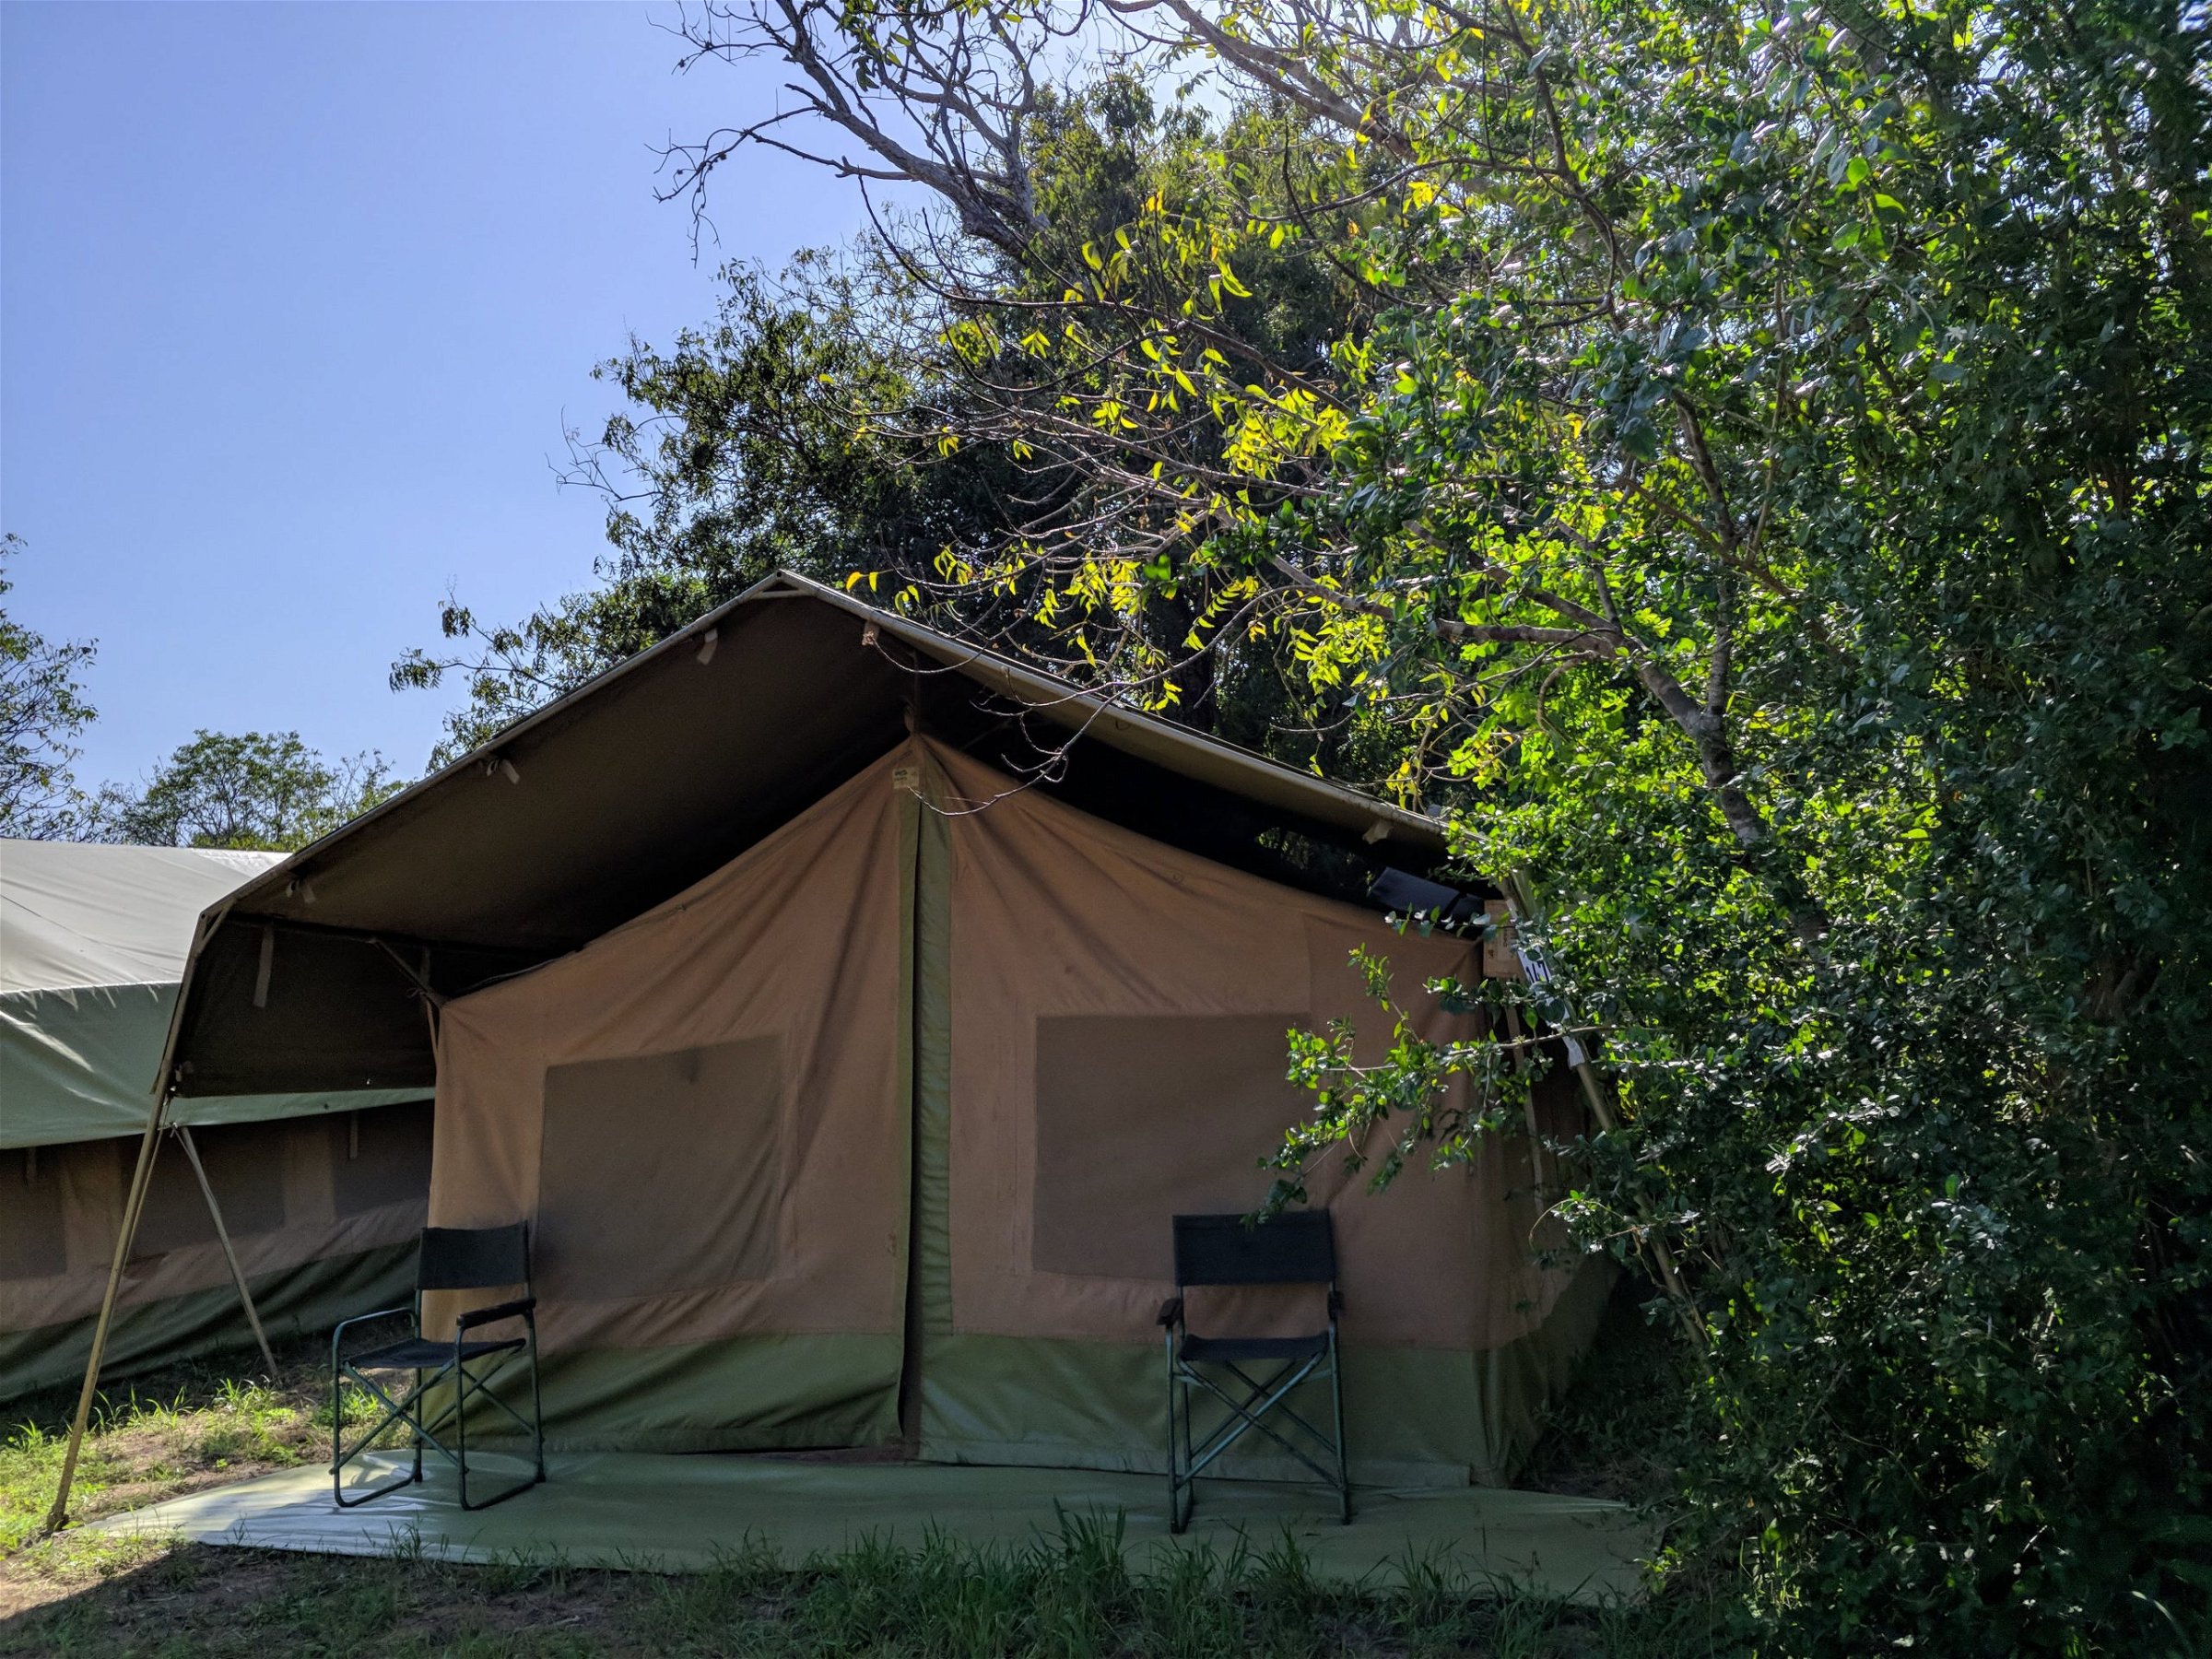 Safari Camp Tents